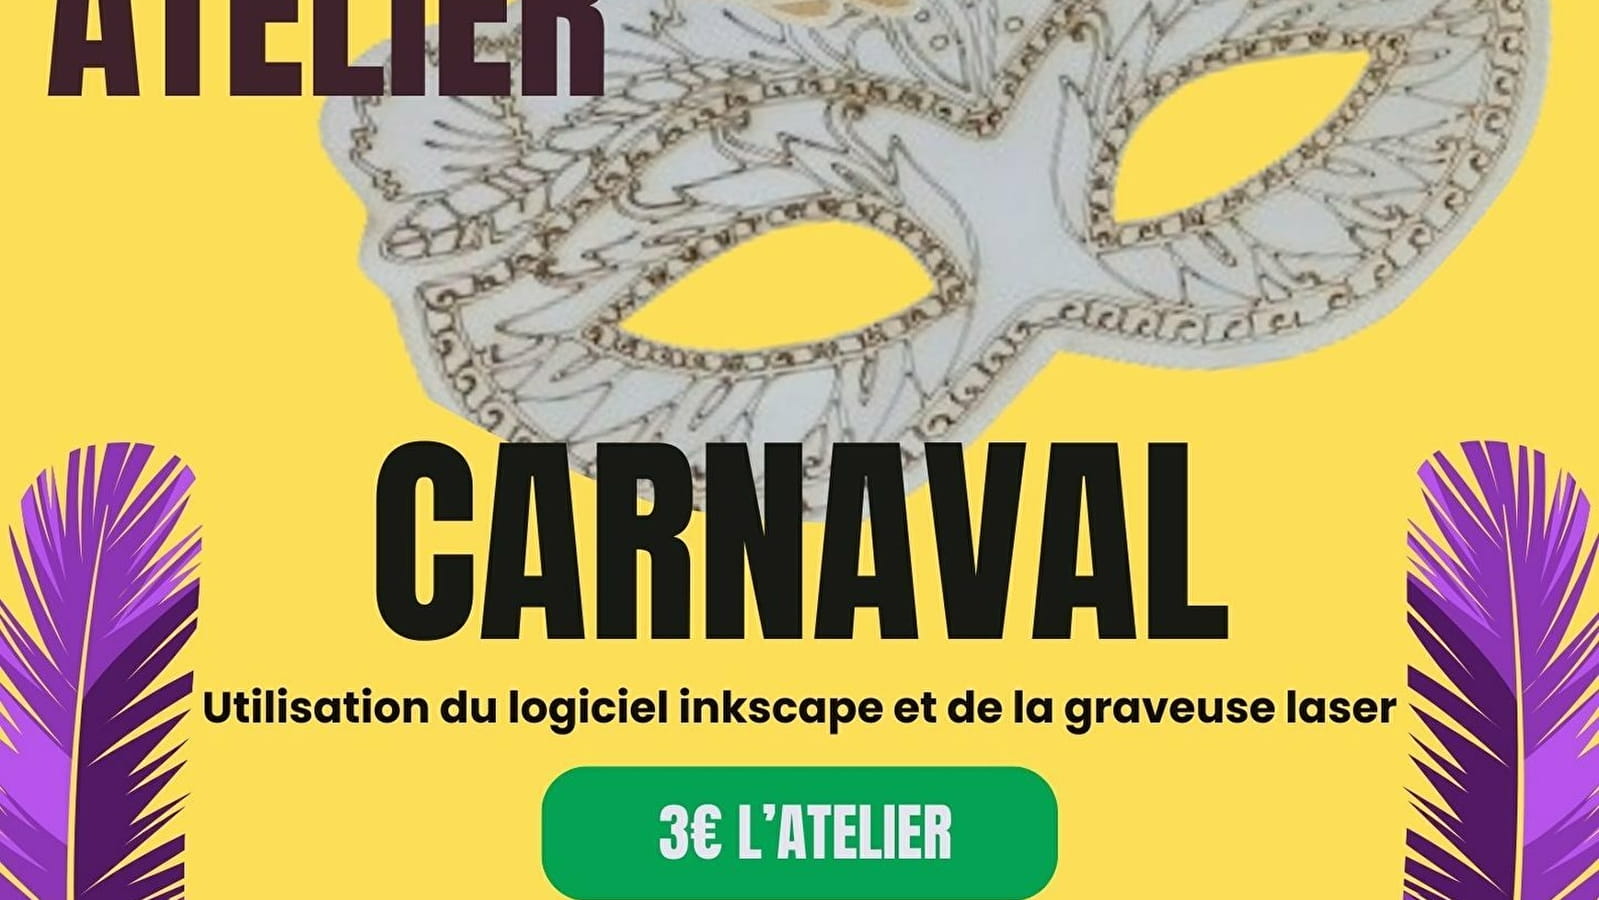 Atelier Carnaval